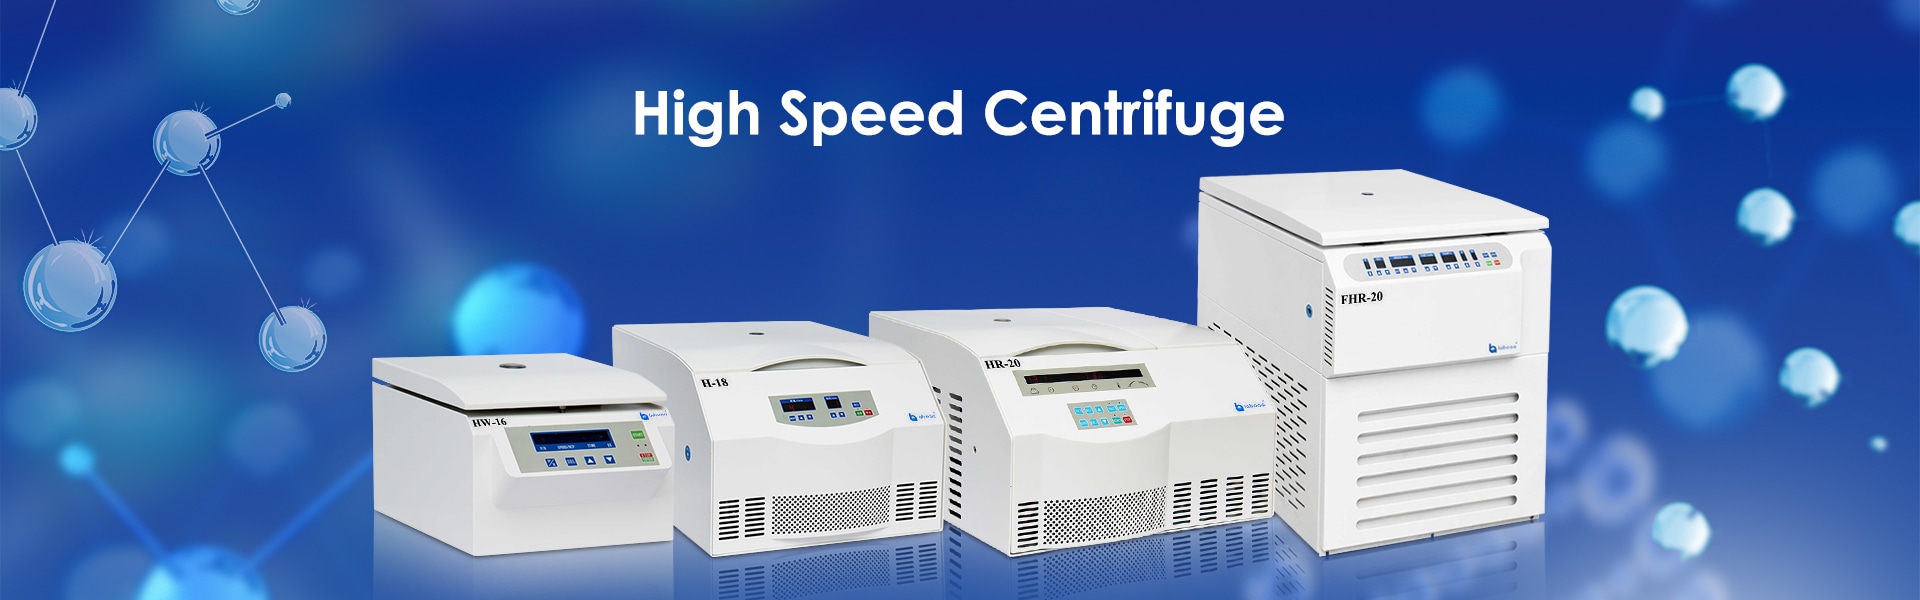 banner of high speed centrifuge